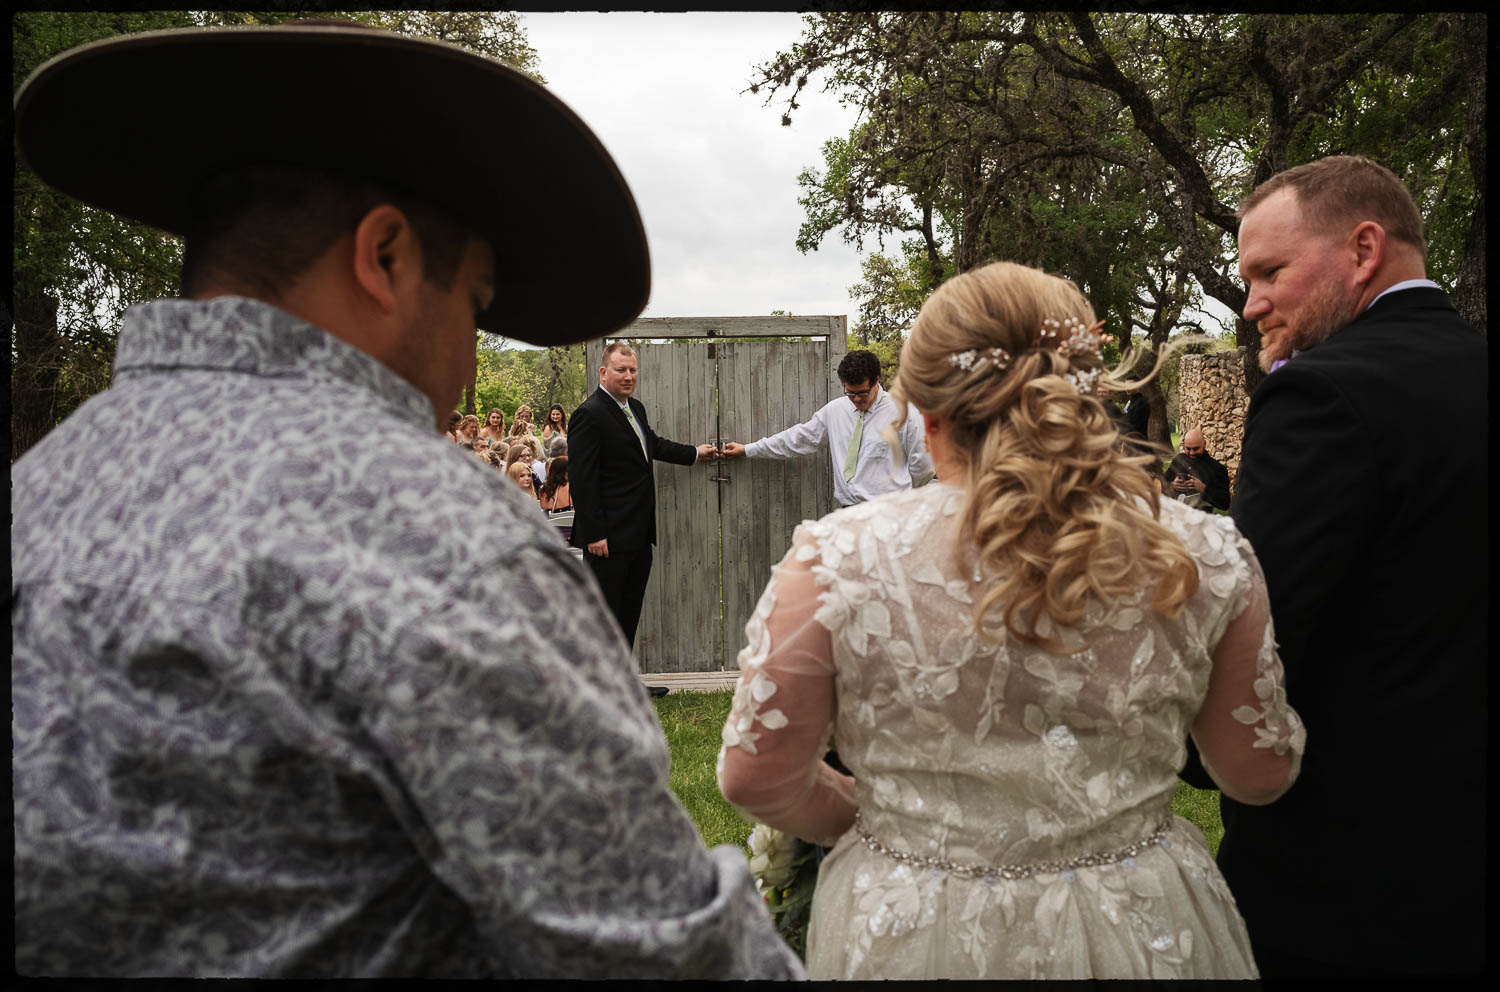 026 Eagle Dancer Ranch Boerne Hill Country Wedding+Reception Philip Thomas Photography L1005416 Edit